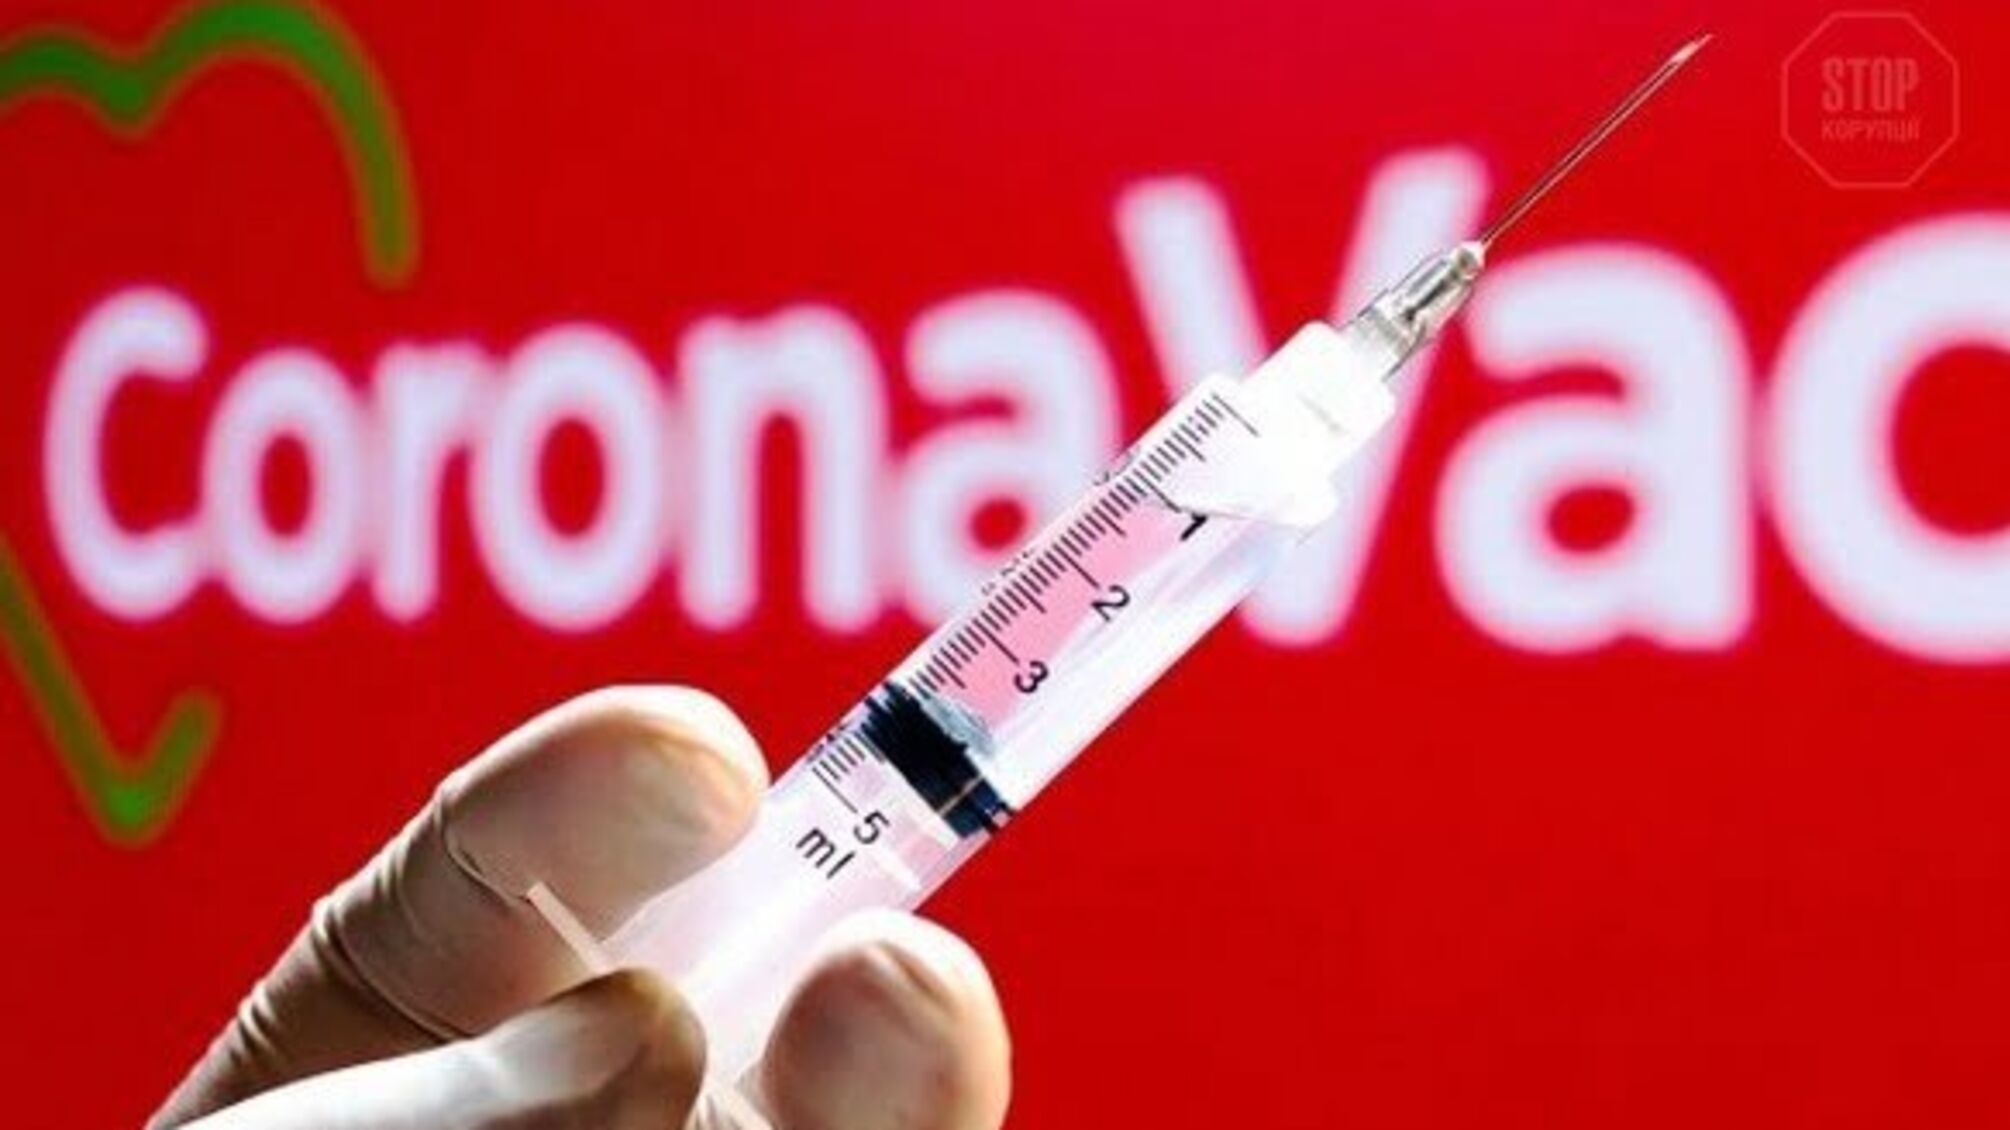 Майже 2,5 млн доз вакцини CoronaVac прибуде в Україну